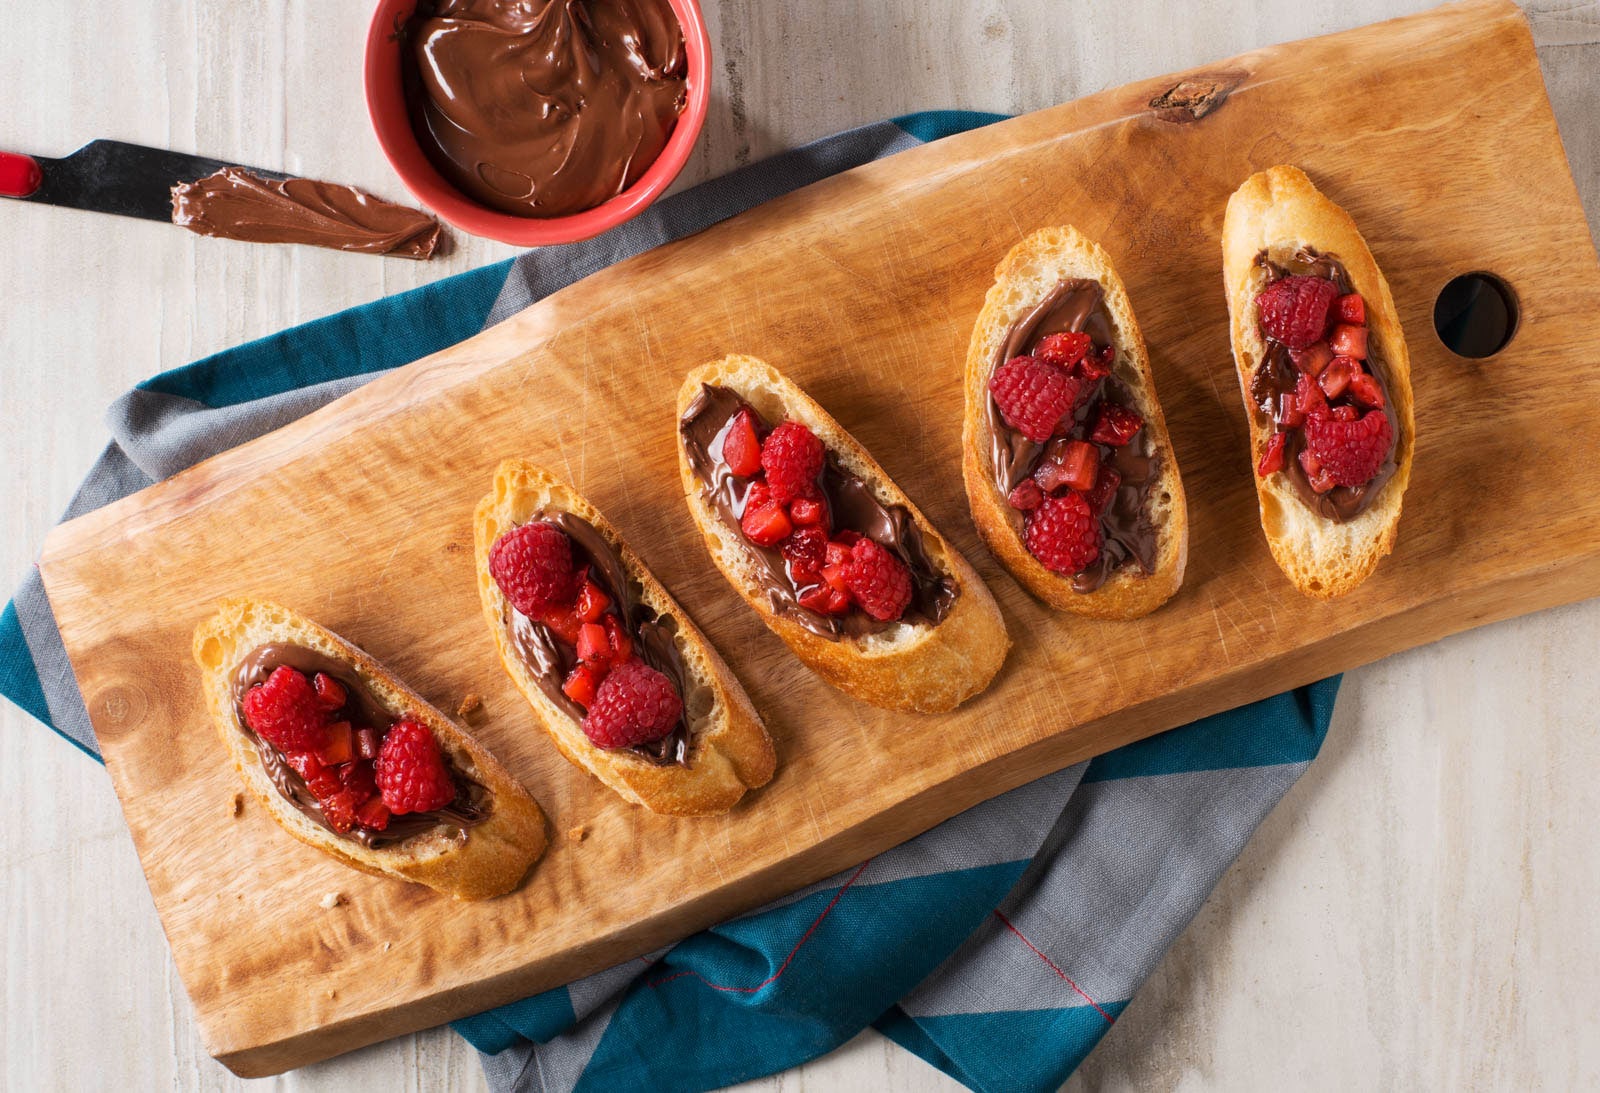 Bruschetta topped with Nutella® hazelnut spread and Blackberries